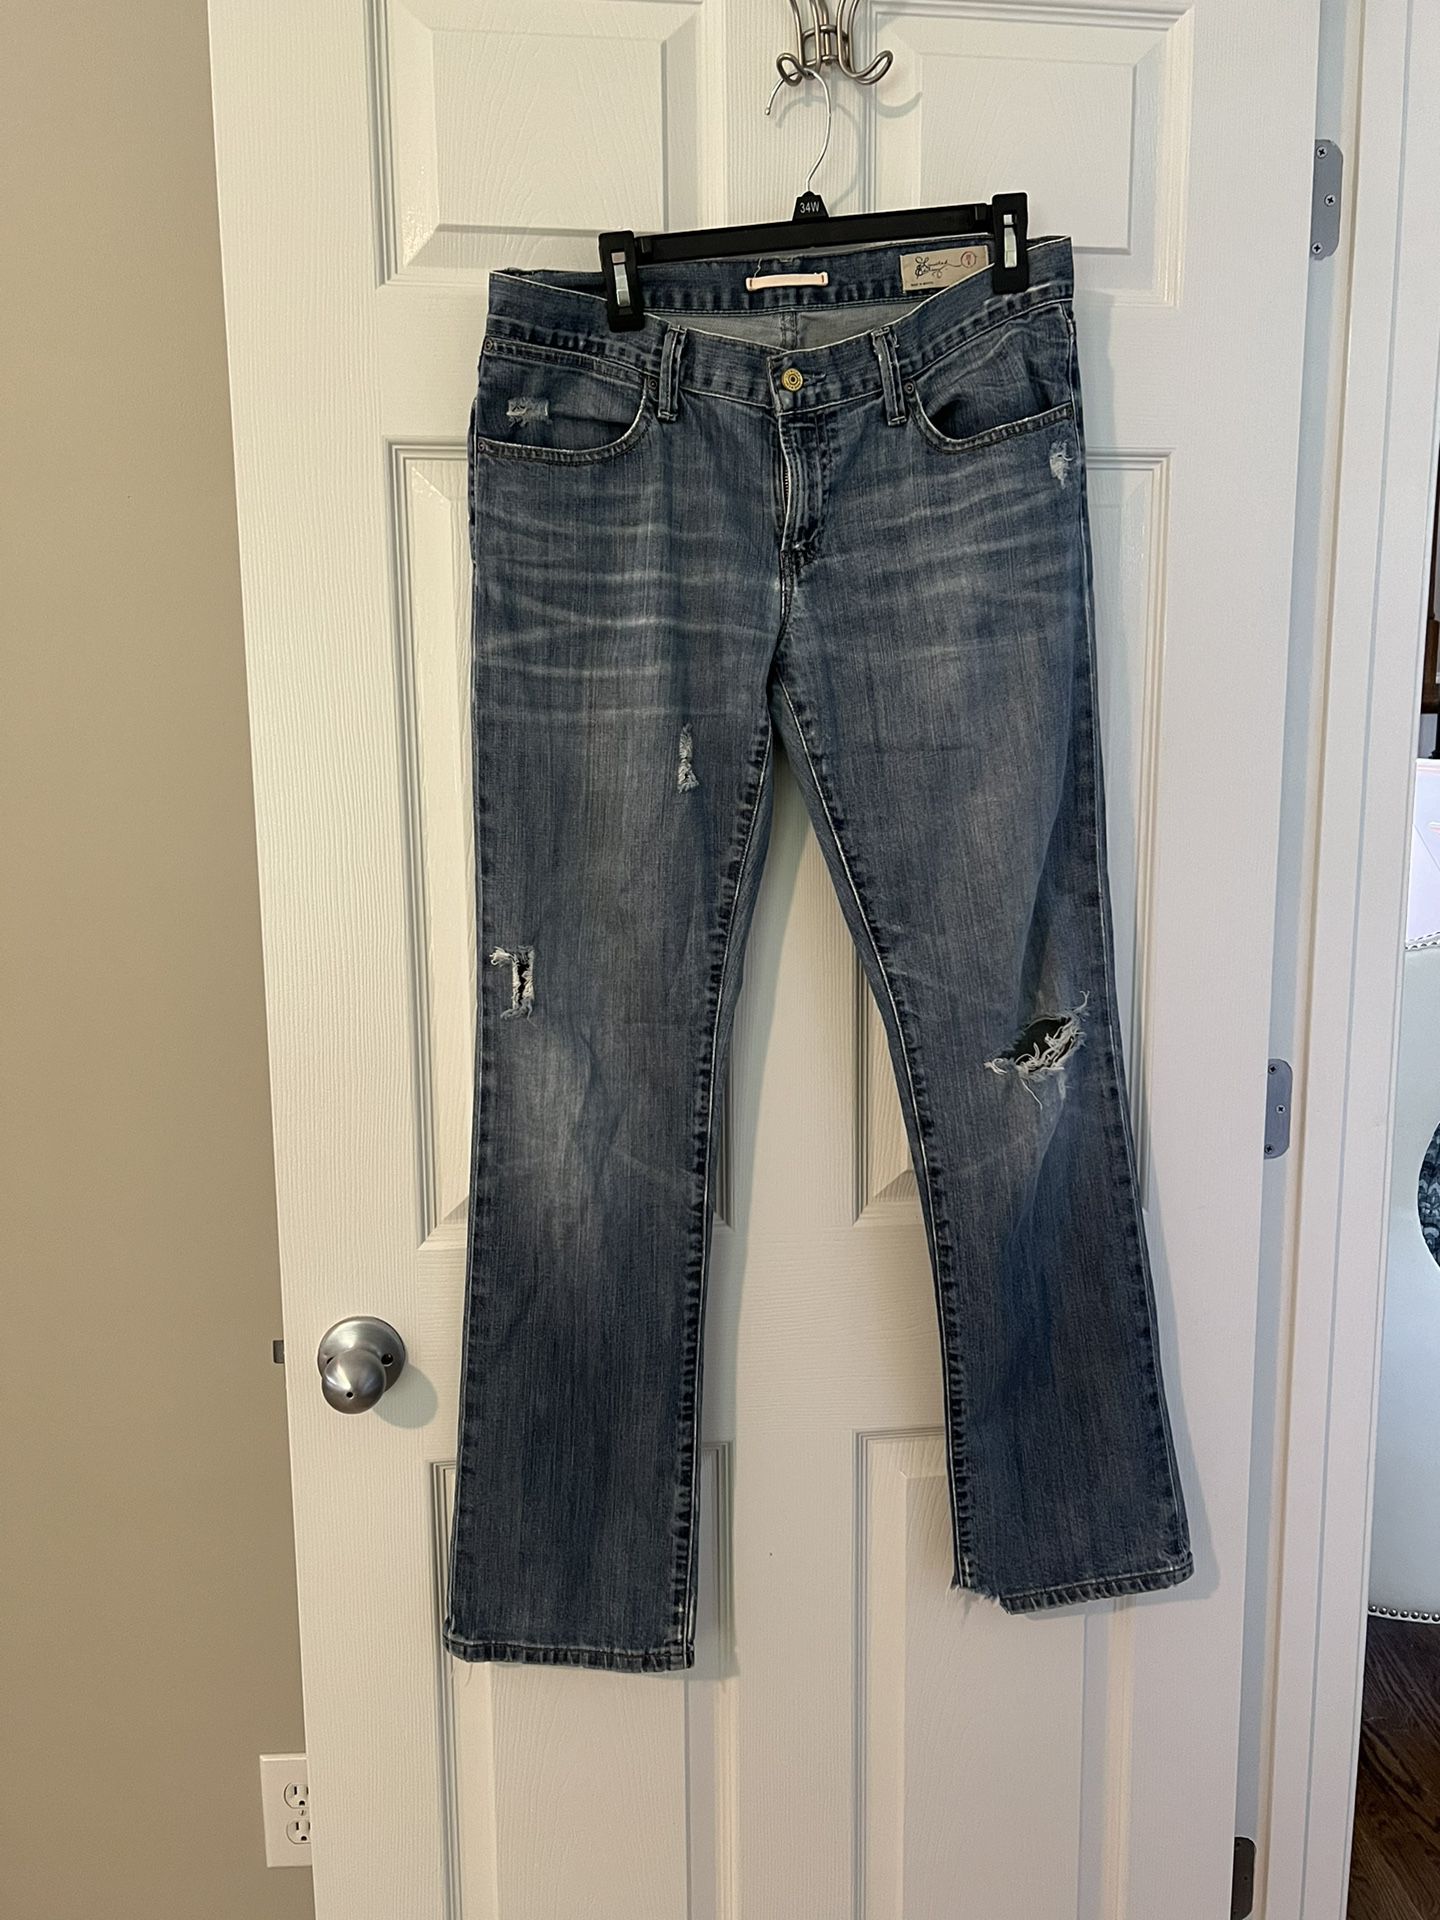 Gap Jeans, Women's  6/28 Blue Denim, Roslyn Boyfriend, Limited Edition Classic!  This pair of Gap jeans is a limited edition Roslyn Boyfriend style in